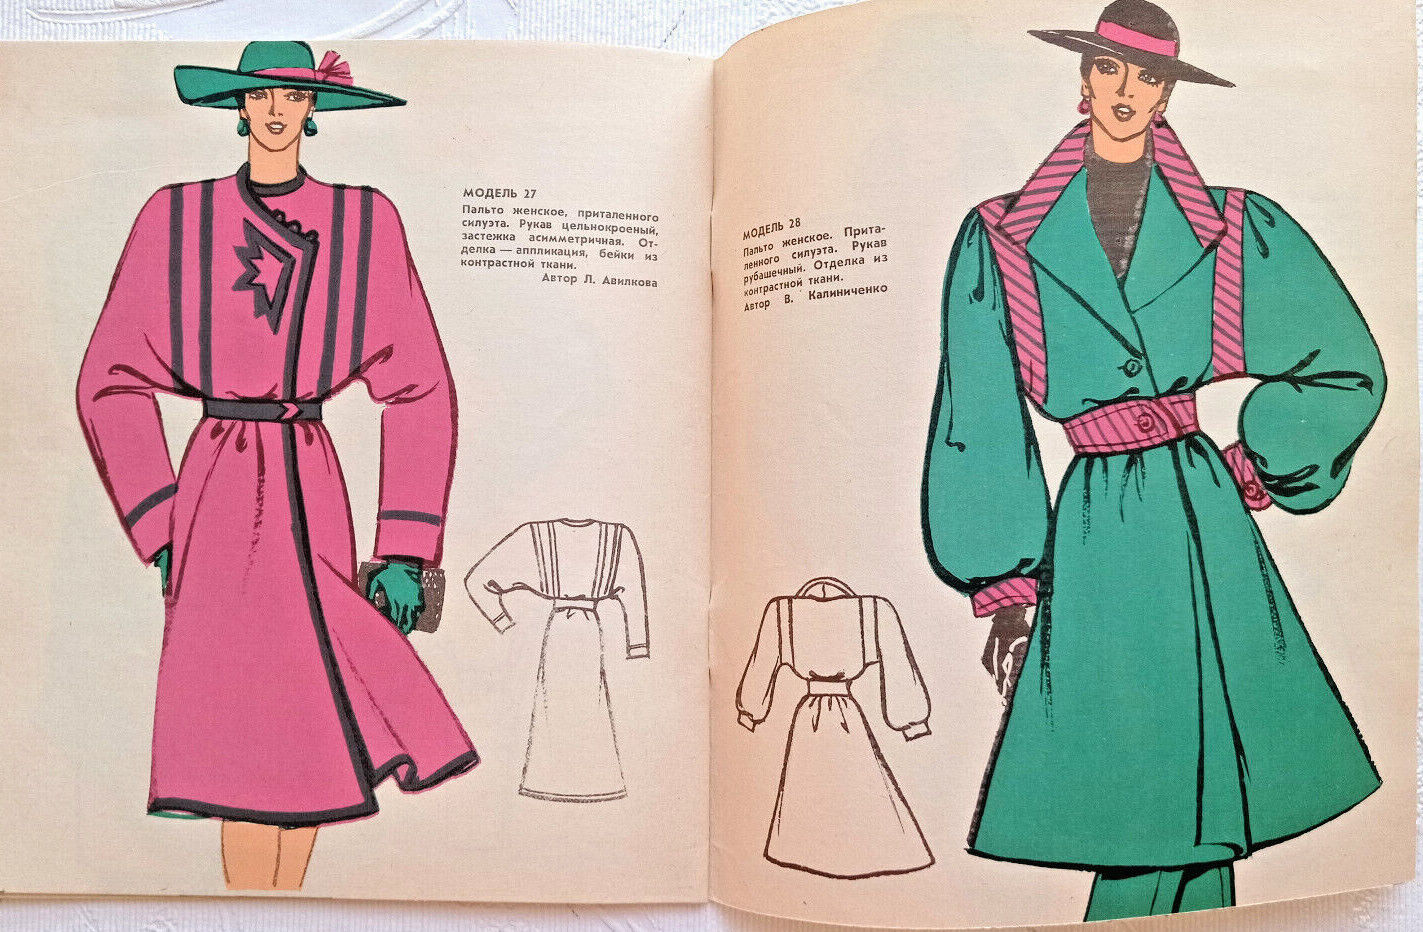 1980s Vintage Fashion Catalog Sewing Patterns Magazine Booklet Women Men Clothes